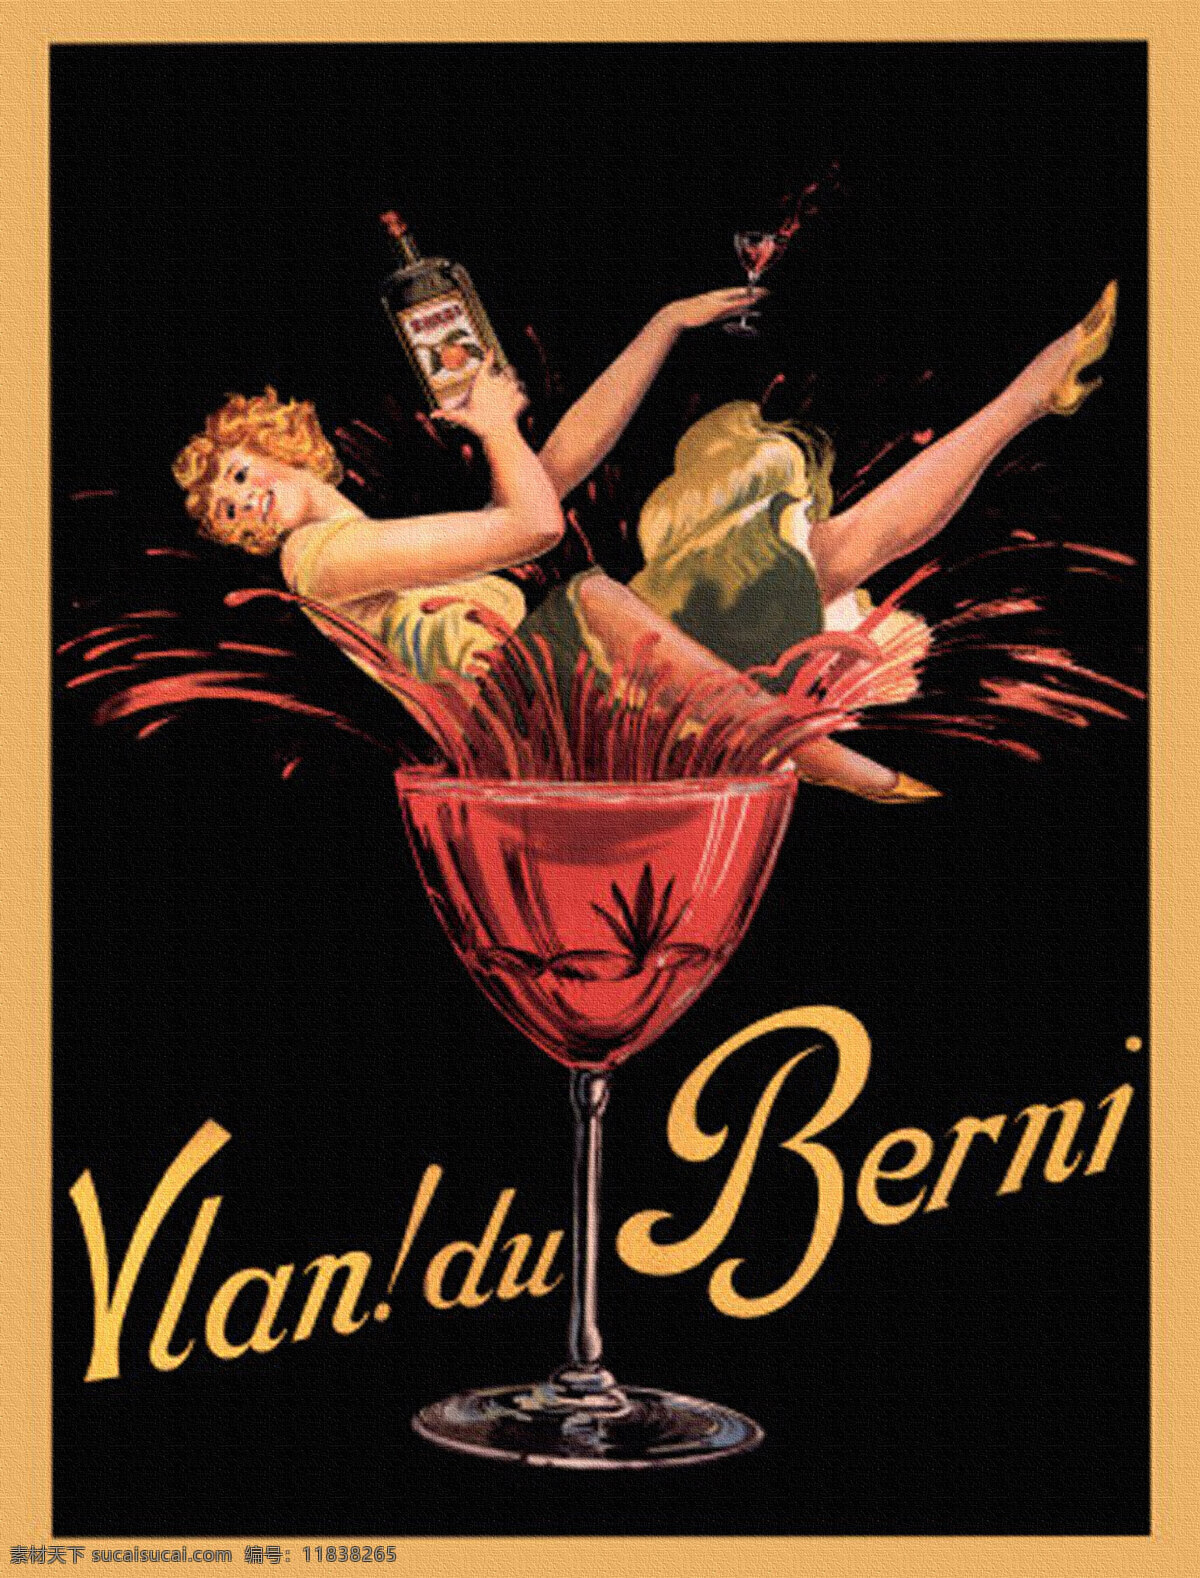 vlan 笃 贝尔尼 海报 广告 时尚 文化 酒 早期 艺术品 印刷品 装饰 酒的广告 欧美 餐饮 装饰画 怀旧 t恤 老 绘画书法 文化艺术